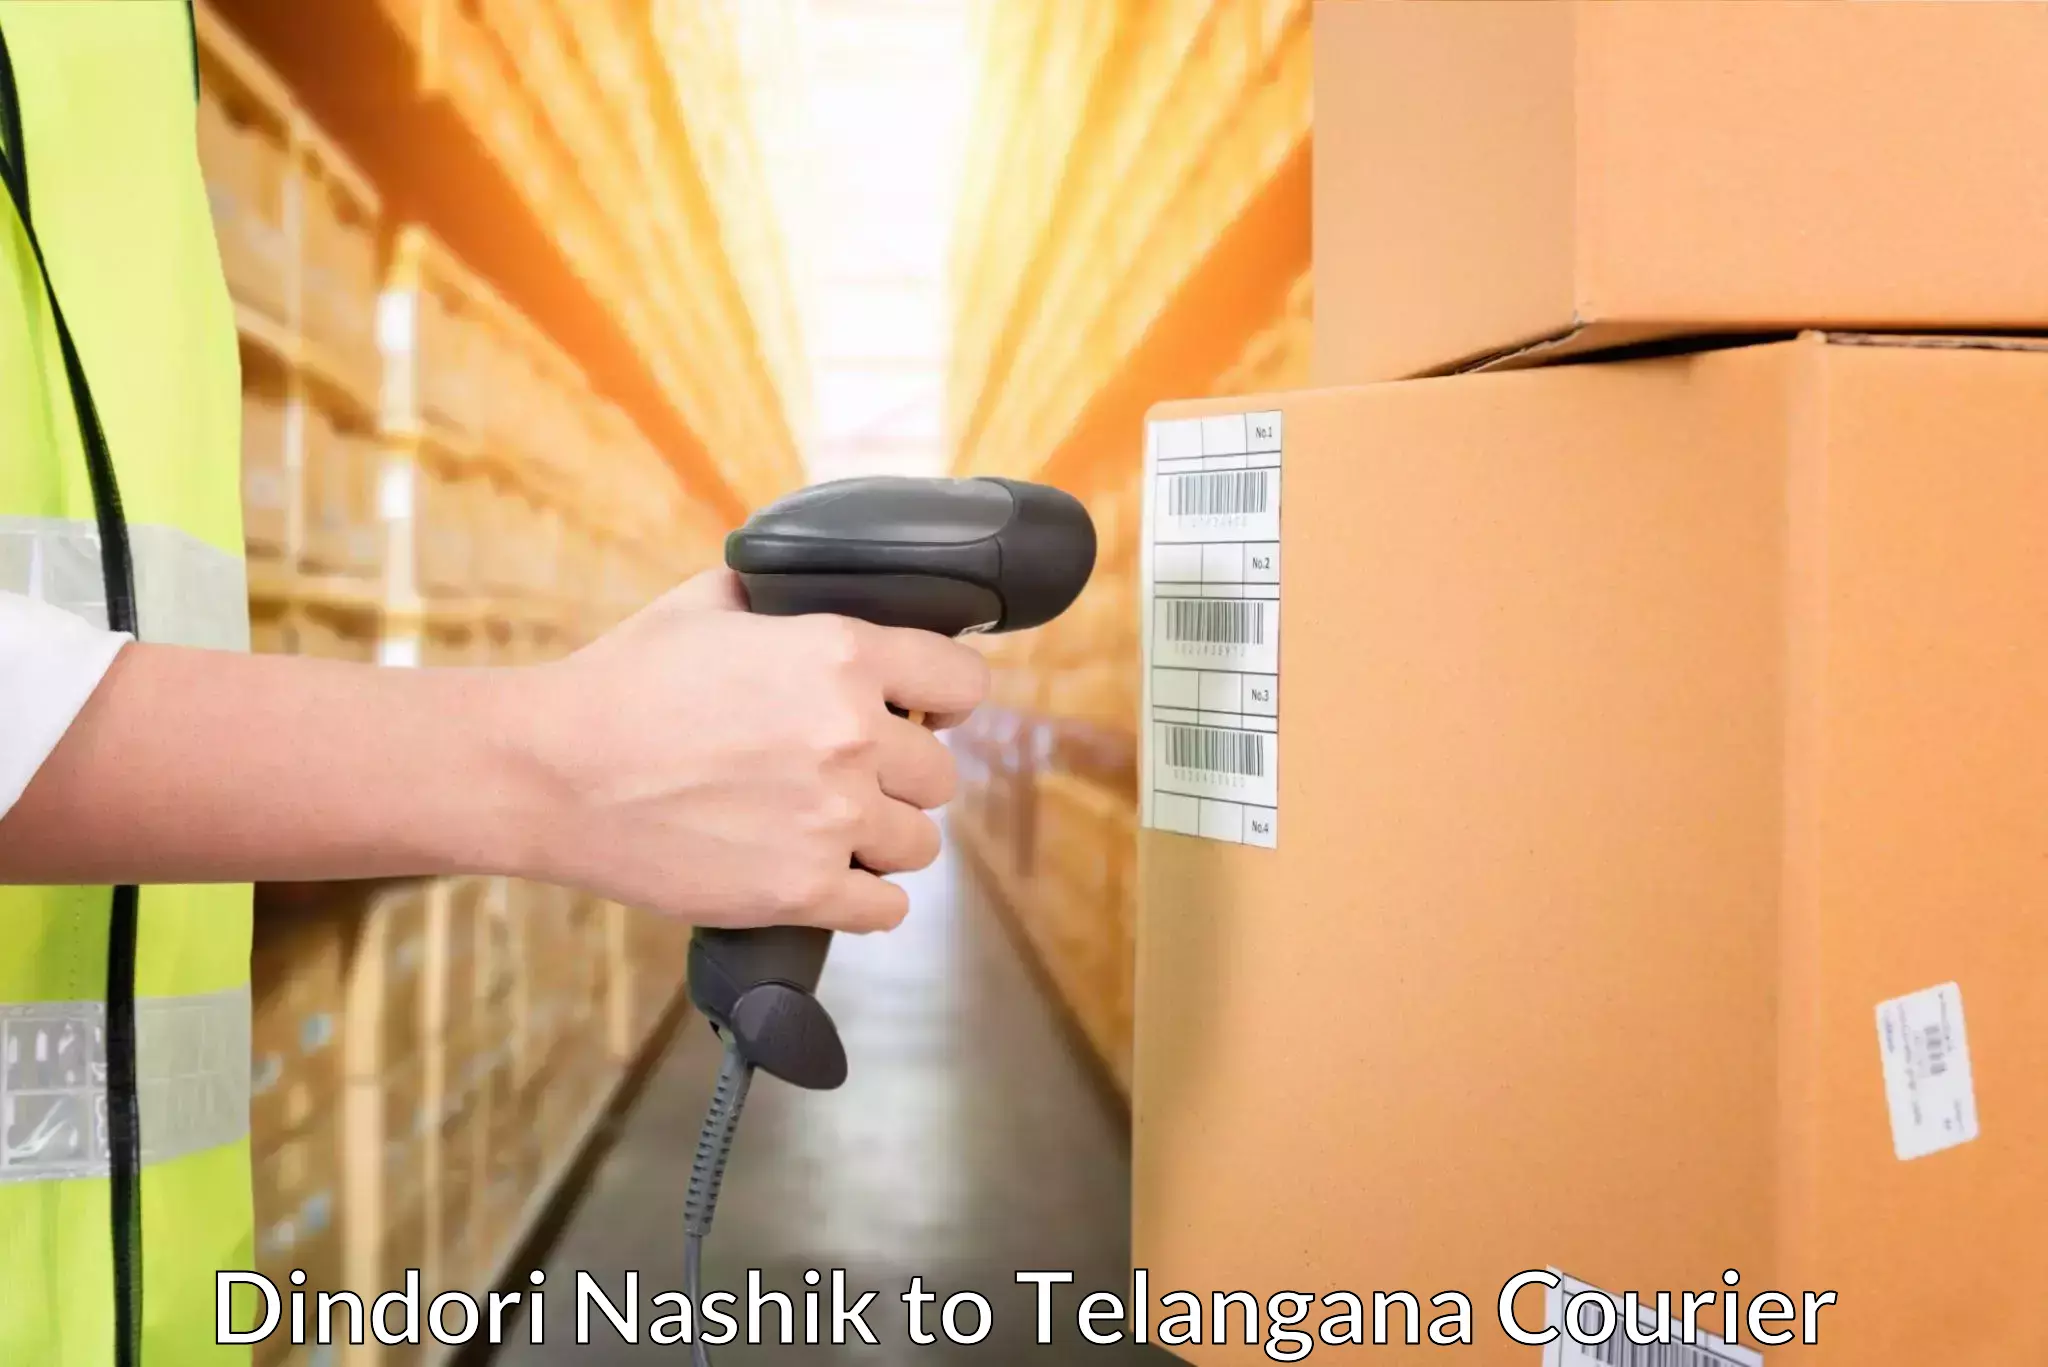 Courier service efficiency Dindori Nashik to IIT Hyderabad